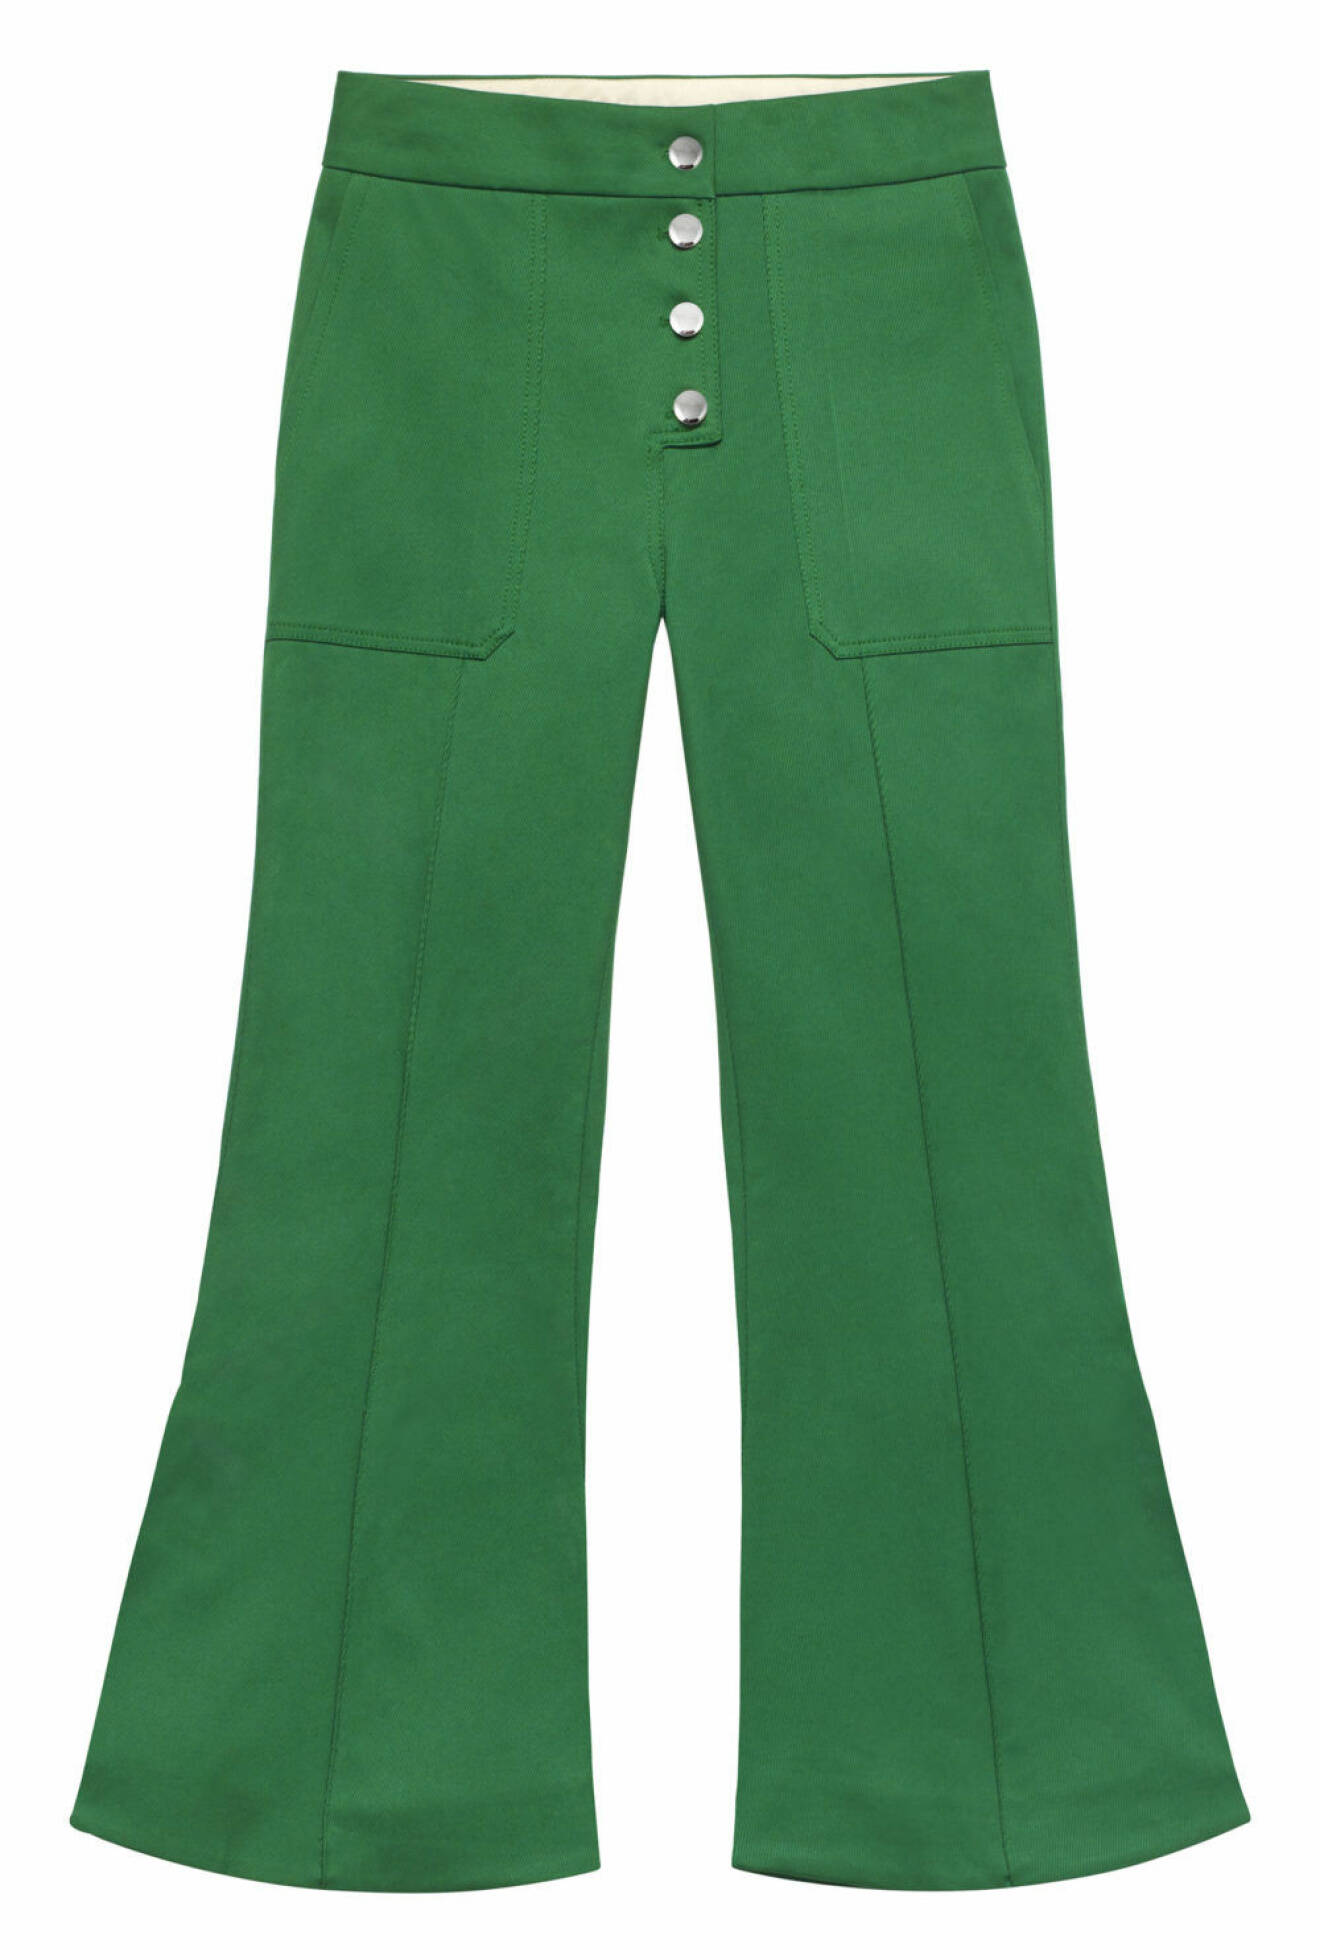 Gröna vida byxor från H&M.